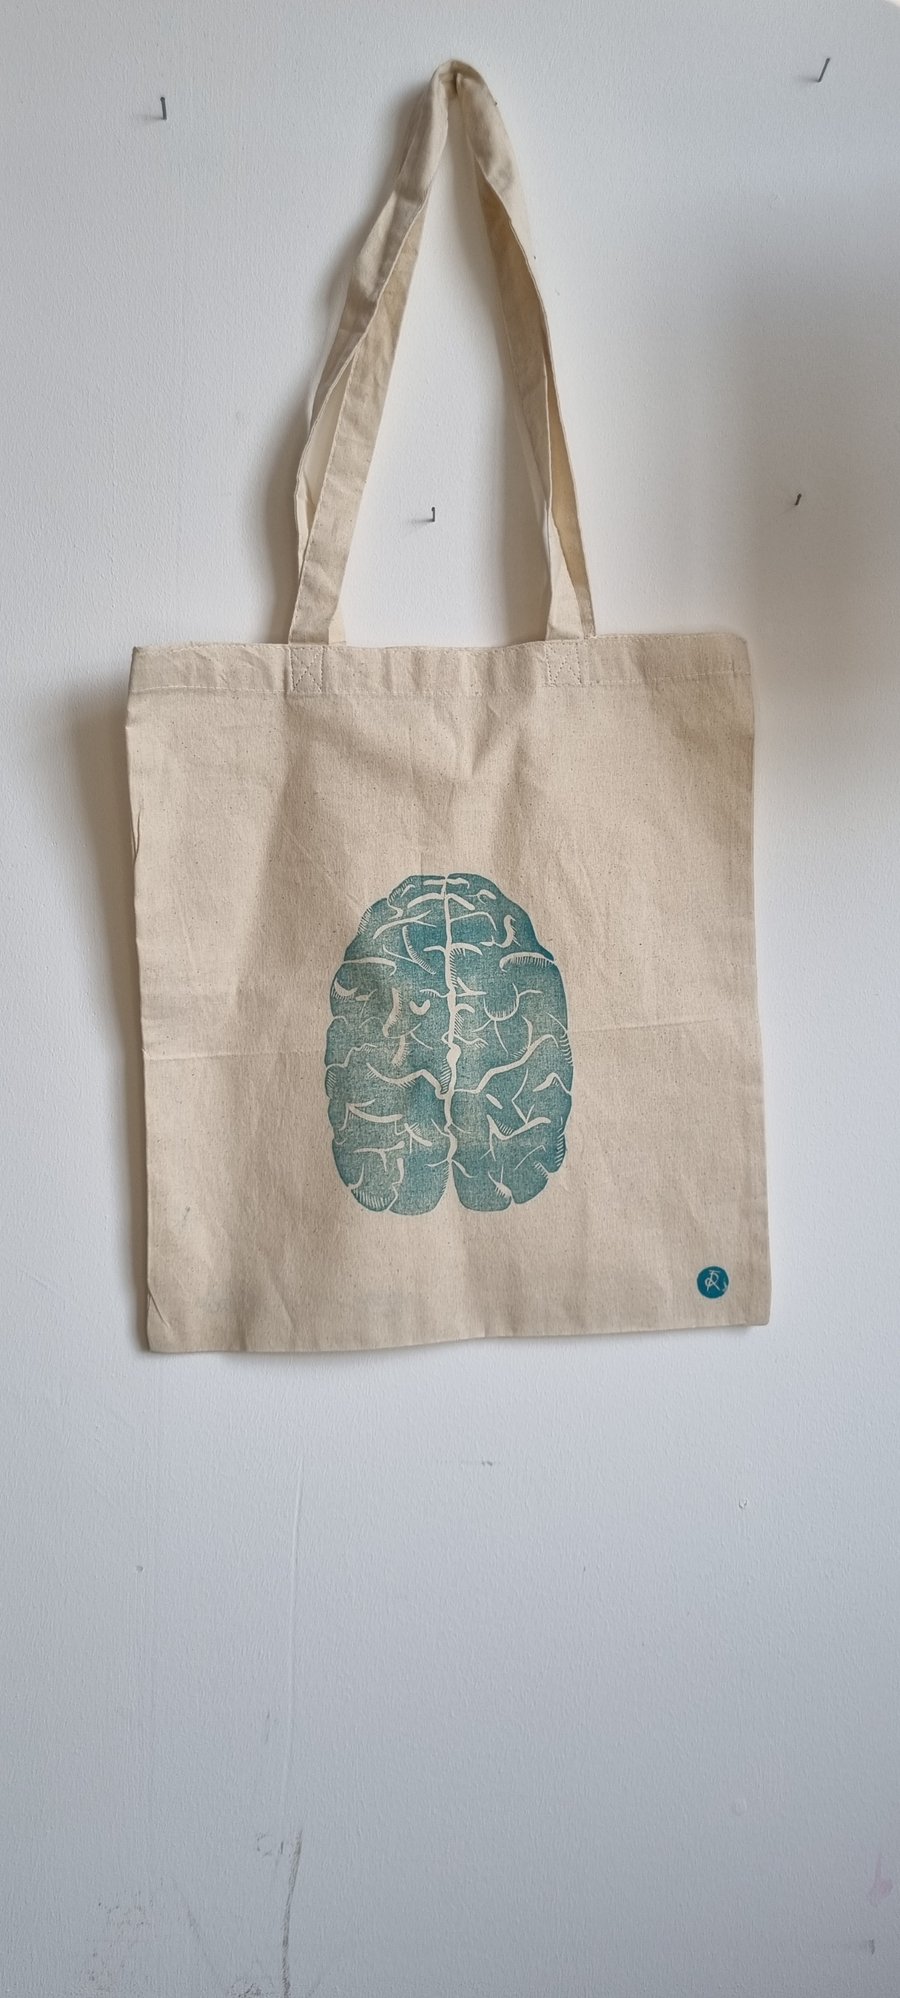 Seconds' Brain print tote bag 